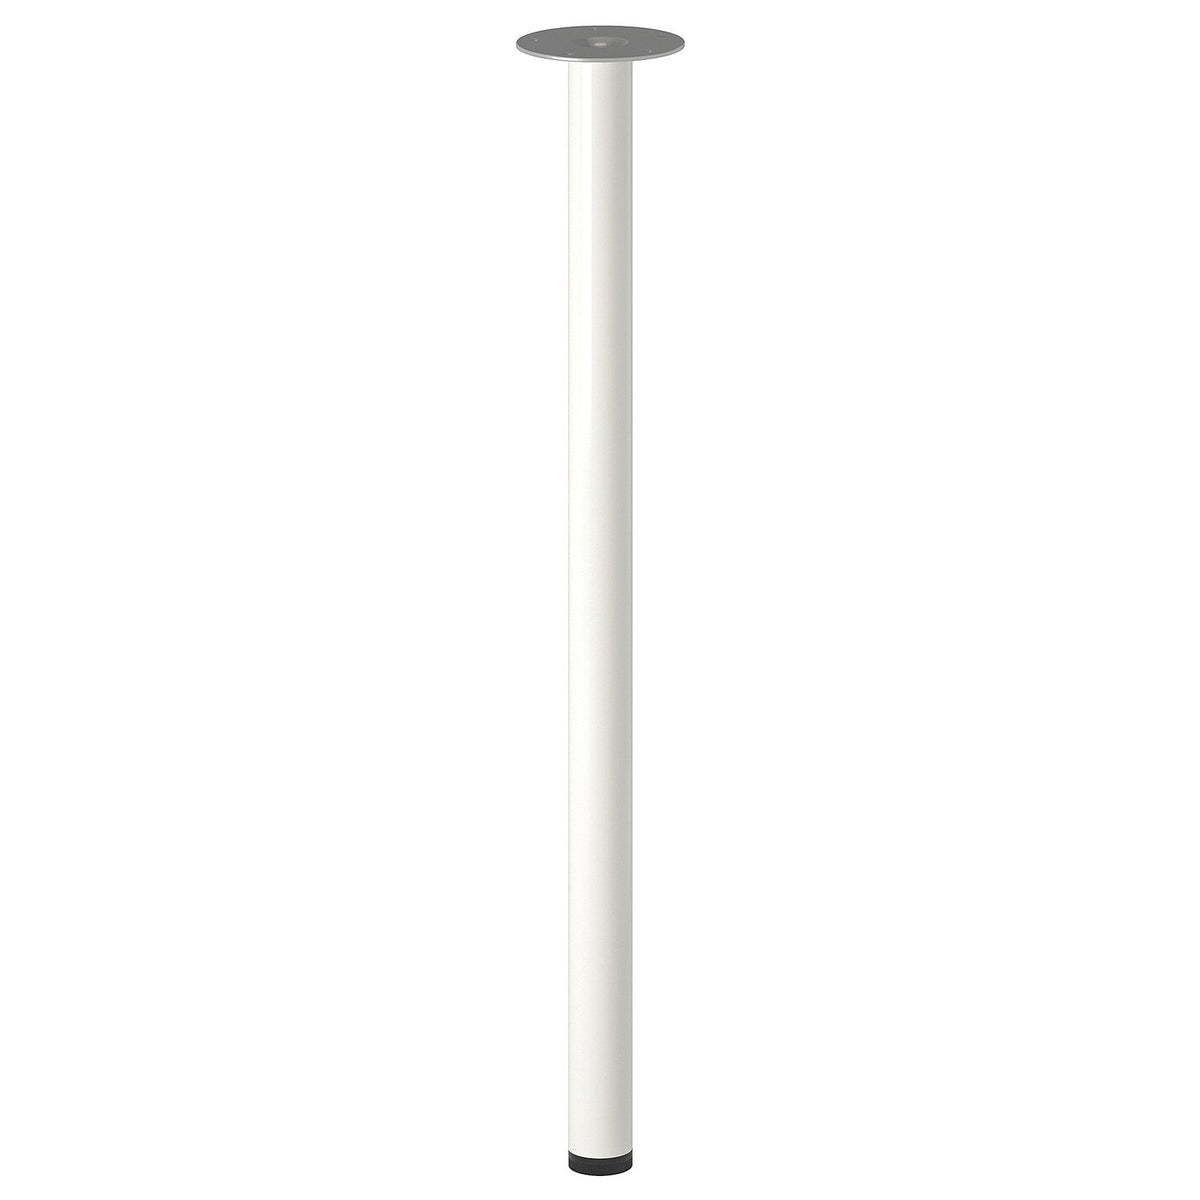 IKEA ADILS table leg, white